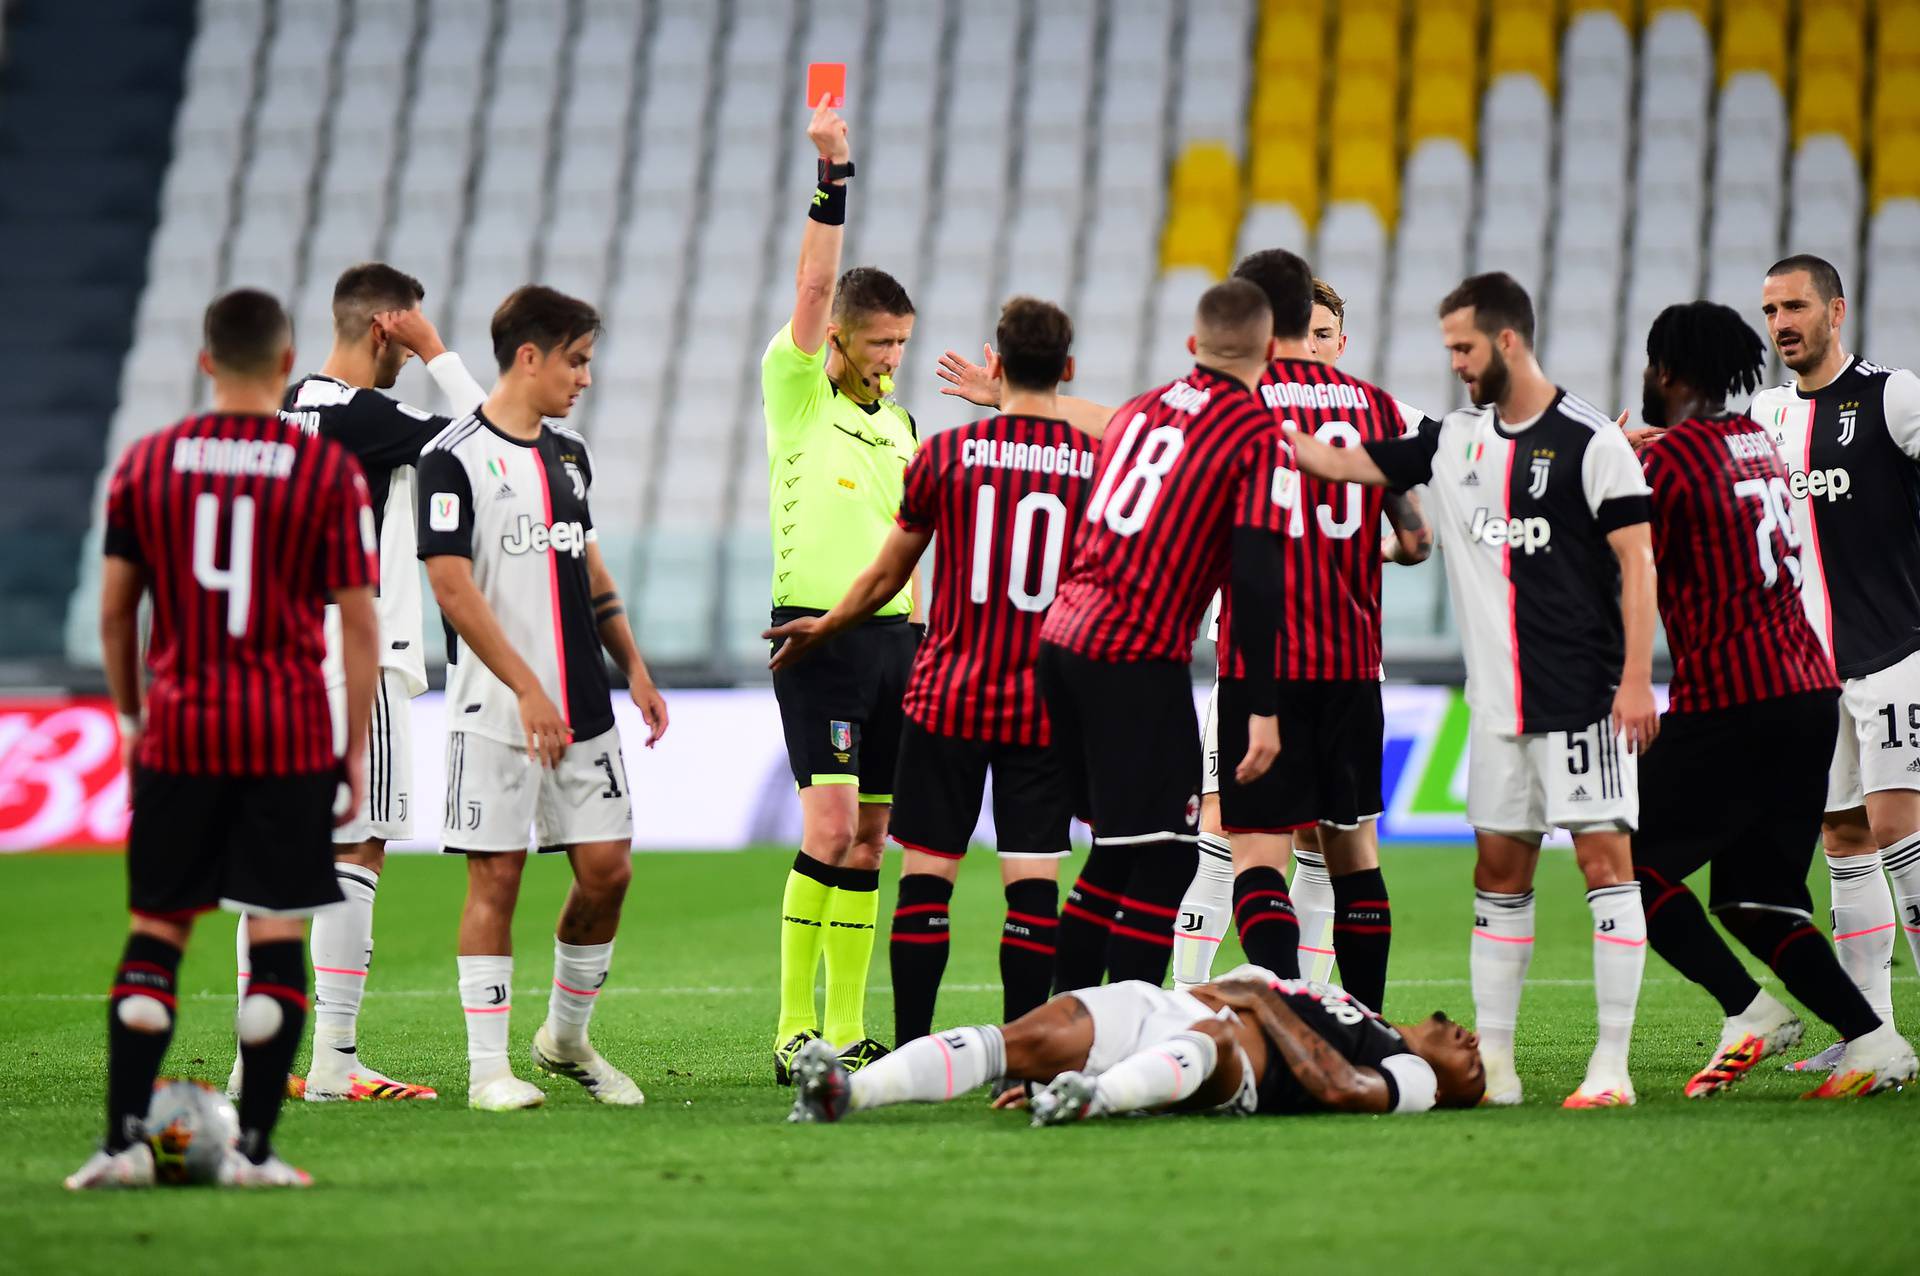 Coppa Italia Semi Final Second Leg - Juventus v AC Milan